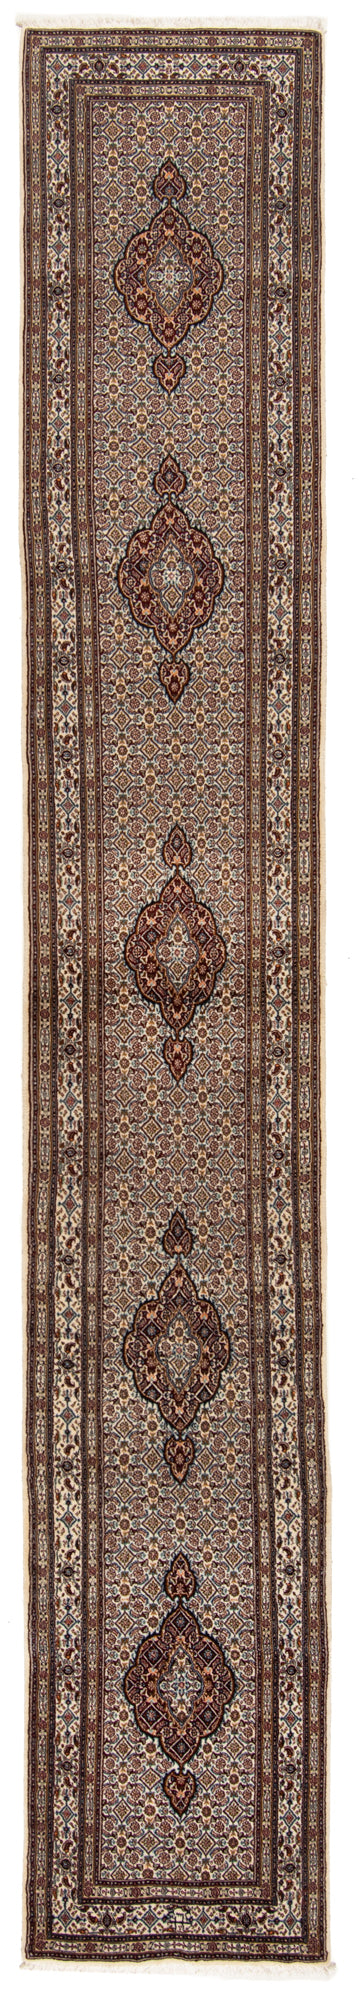 Moud com tapete de seda persa | 501x77cm